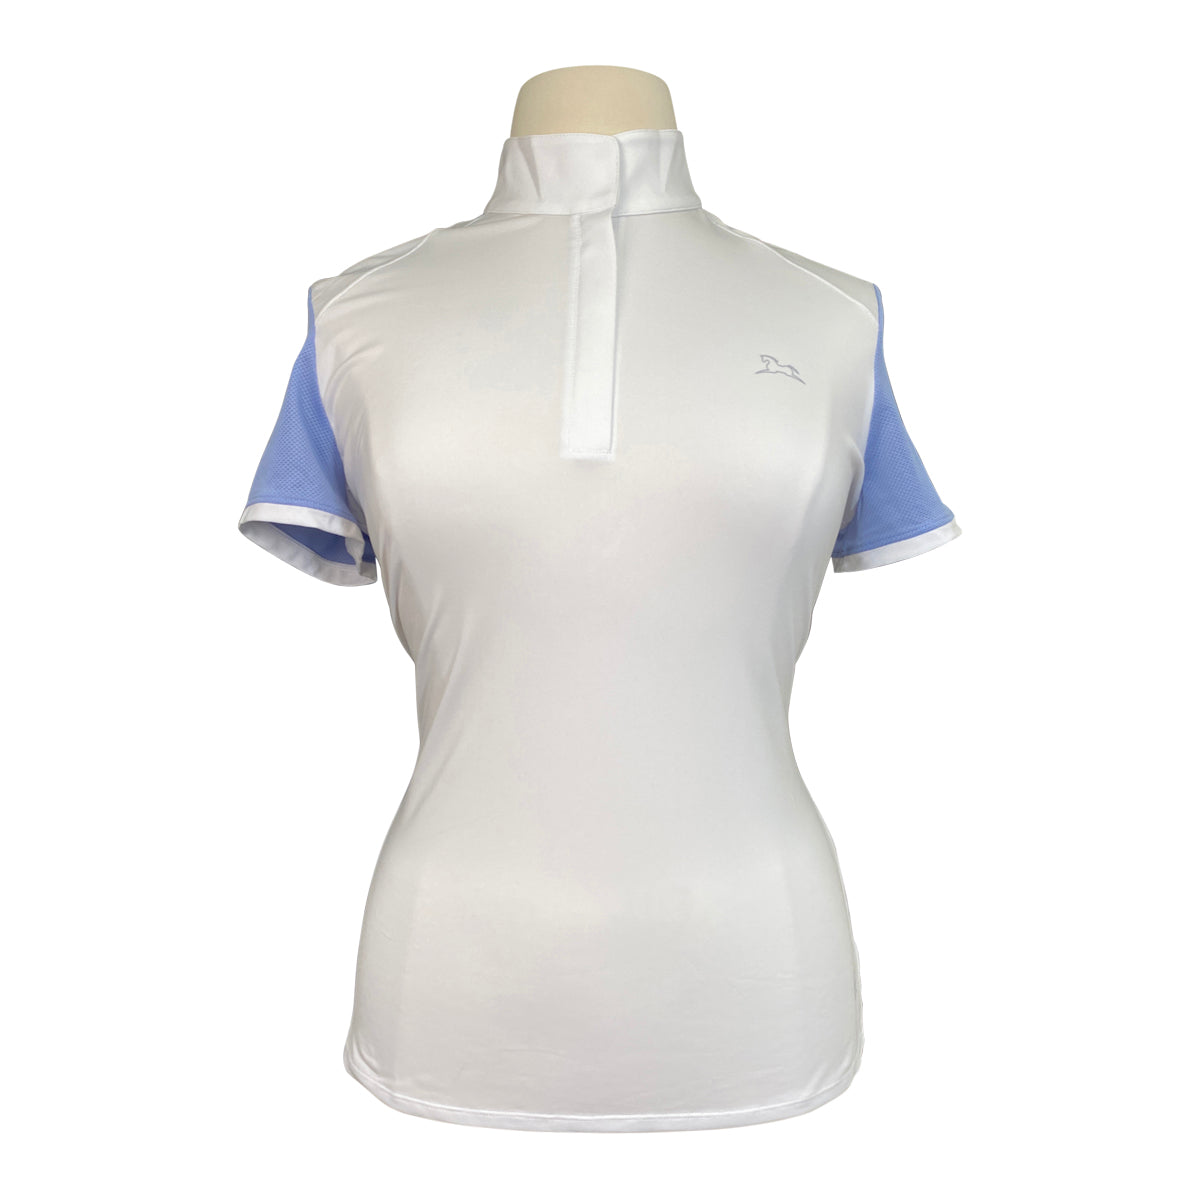 RJ Classics 'Aerial 37.5' Show Shirt in White w/Blue